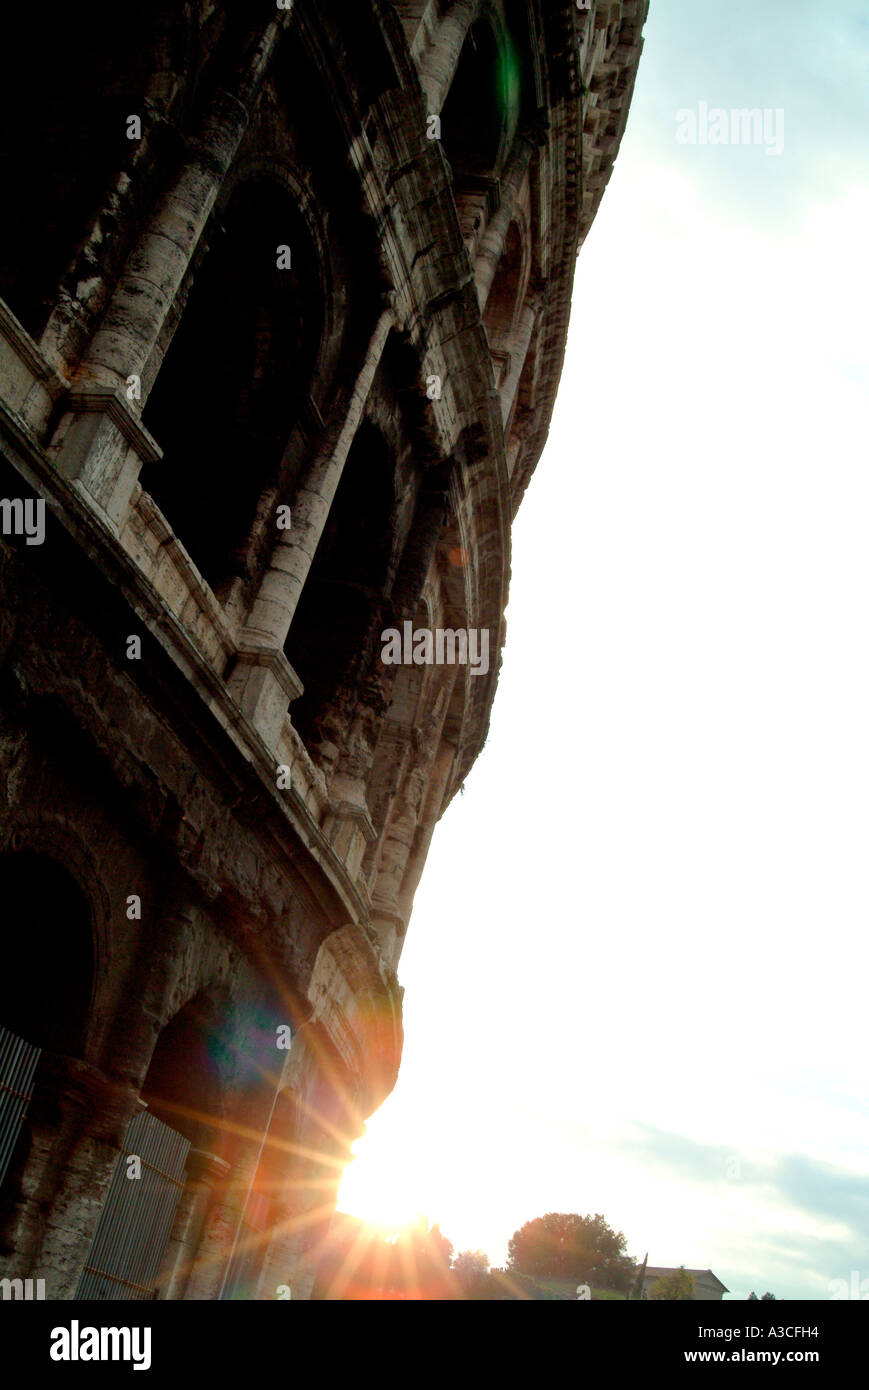 Das Kolosseum in Rom Italien Europa Stockfoto